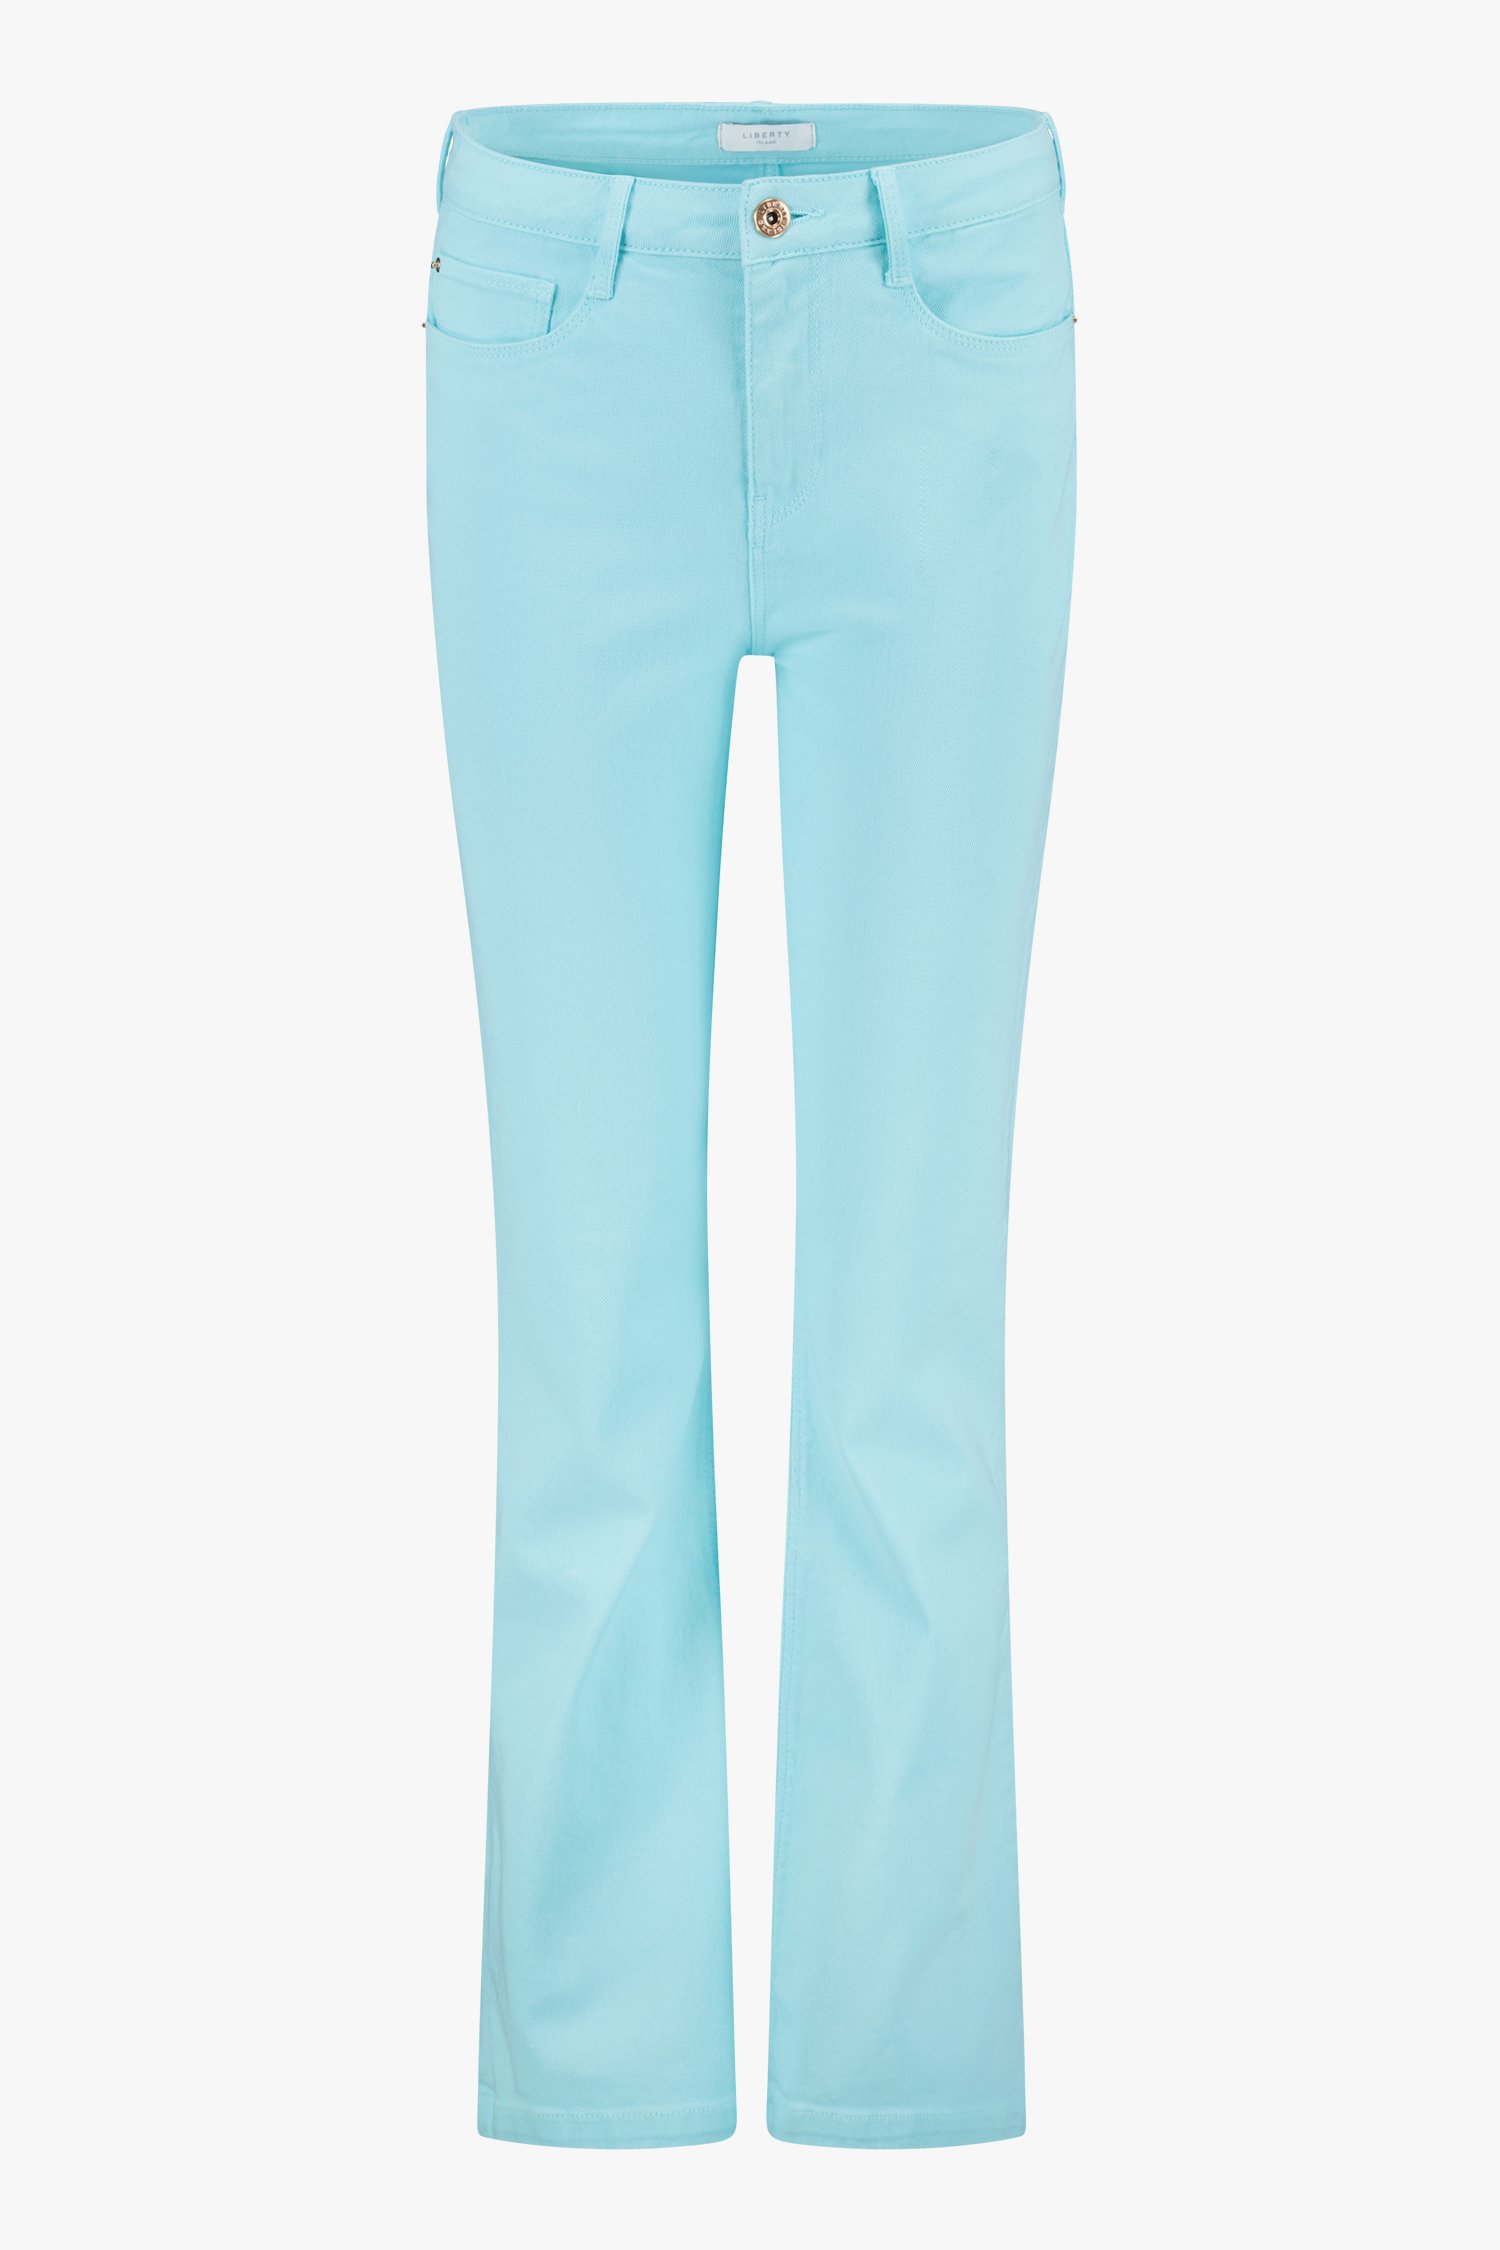 Jeans turquoise - Billy - Bootcut de Liberty Island Denim pour Femmes